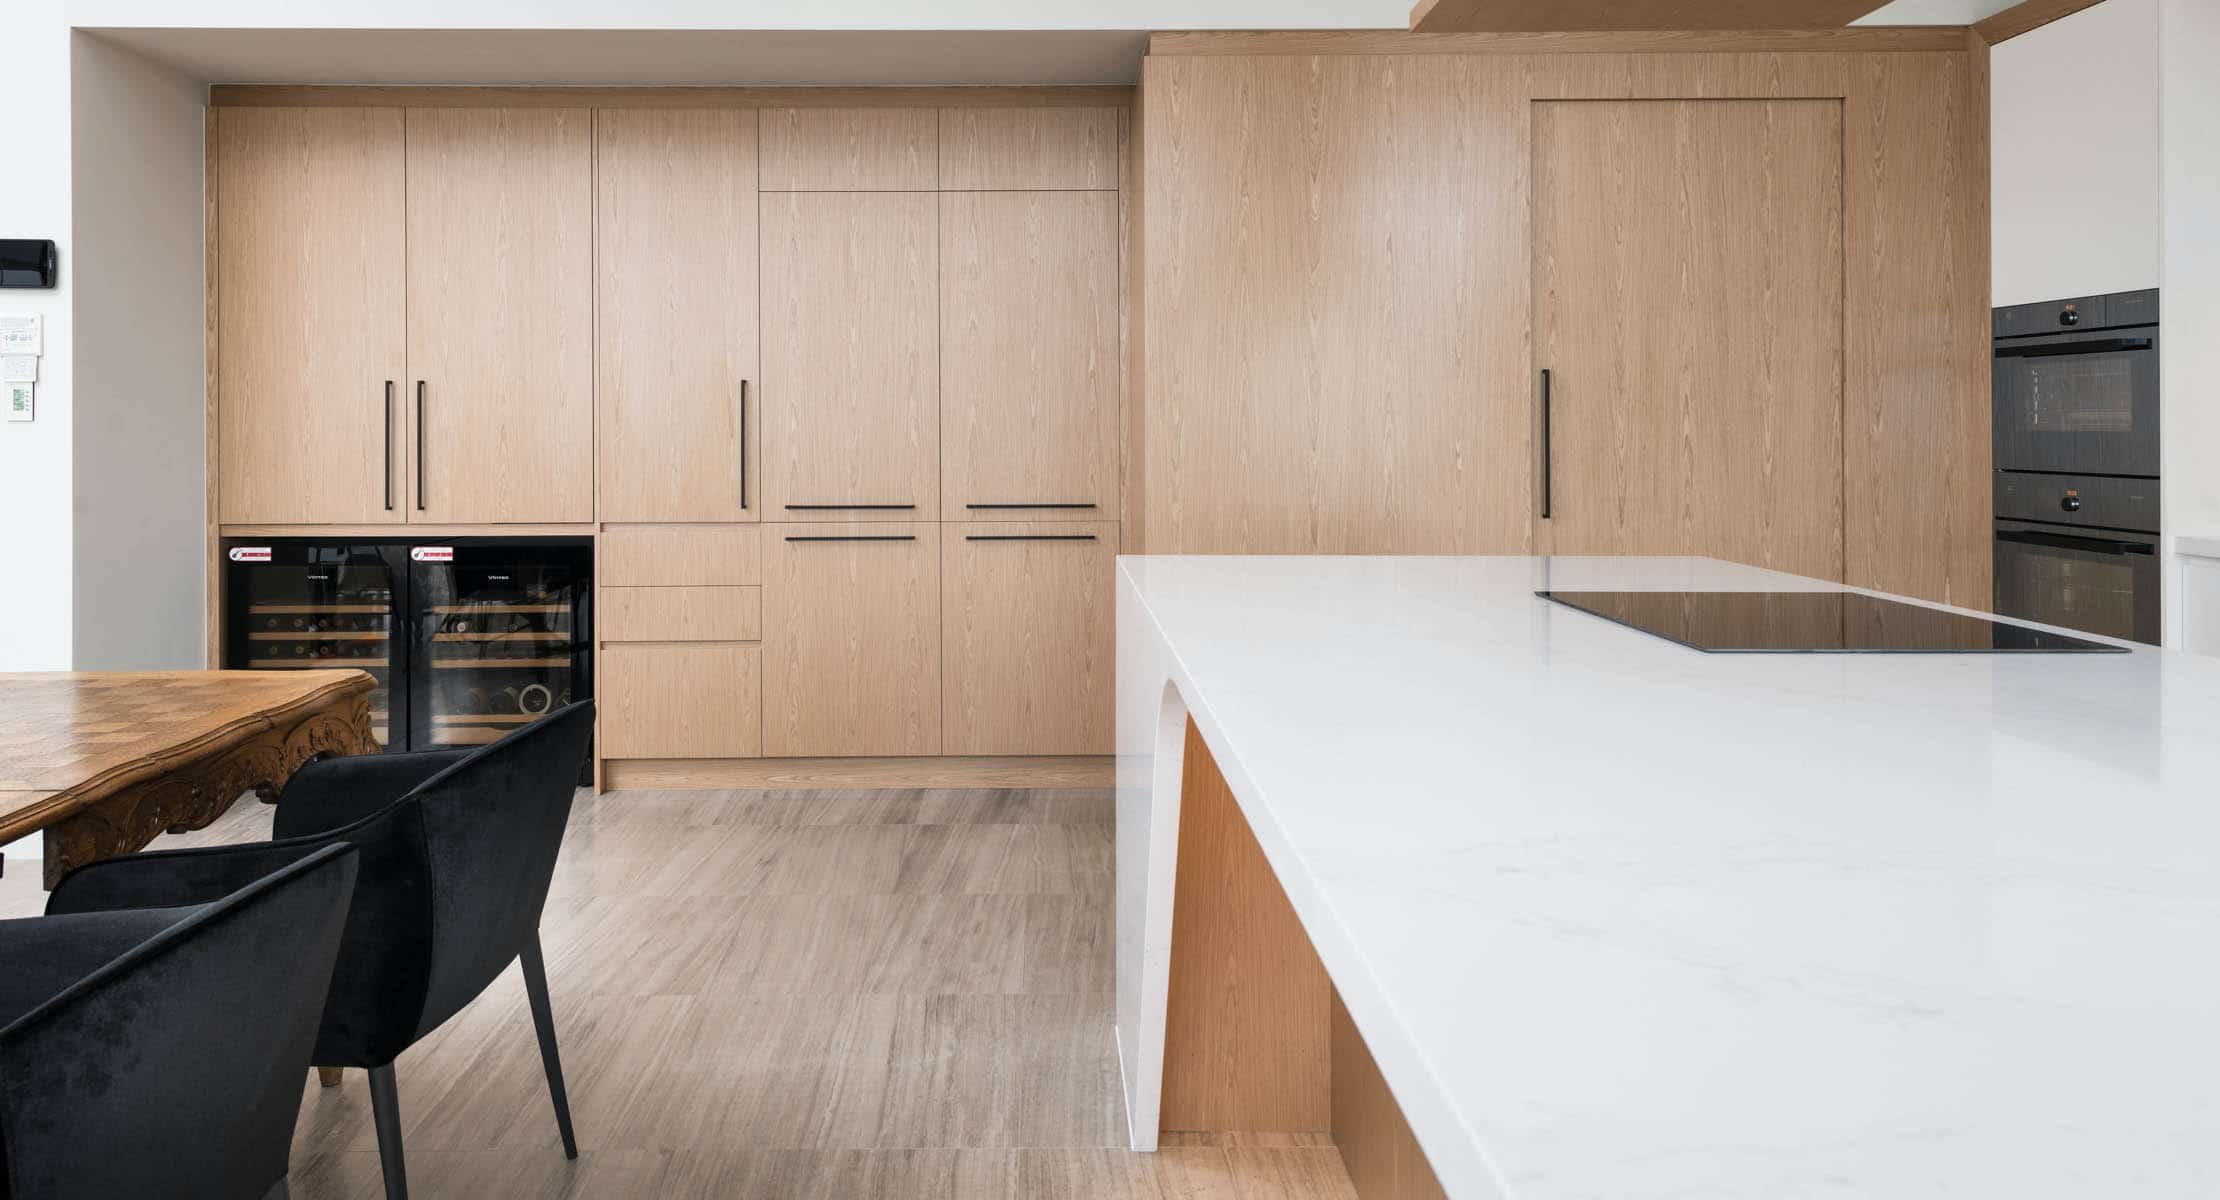 Connection between kitchen and living room   Cosentino Hong Kong